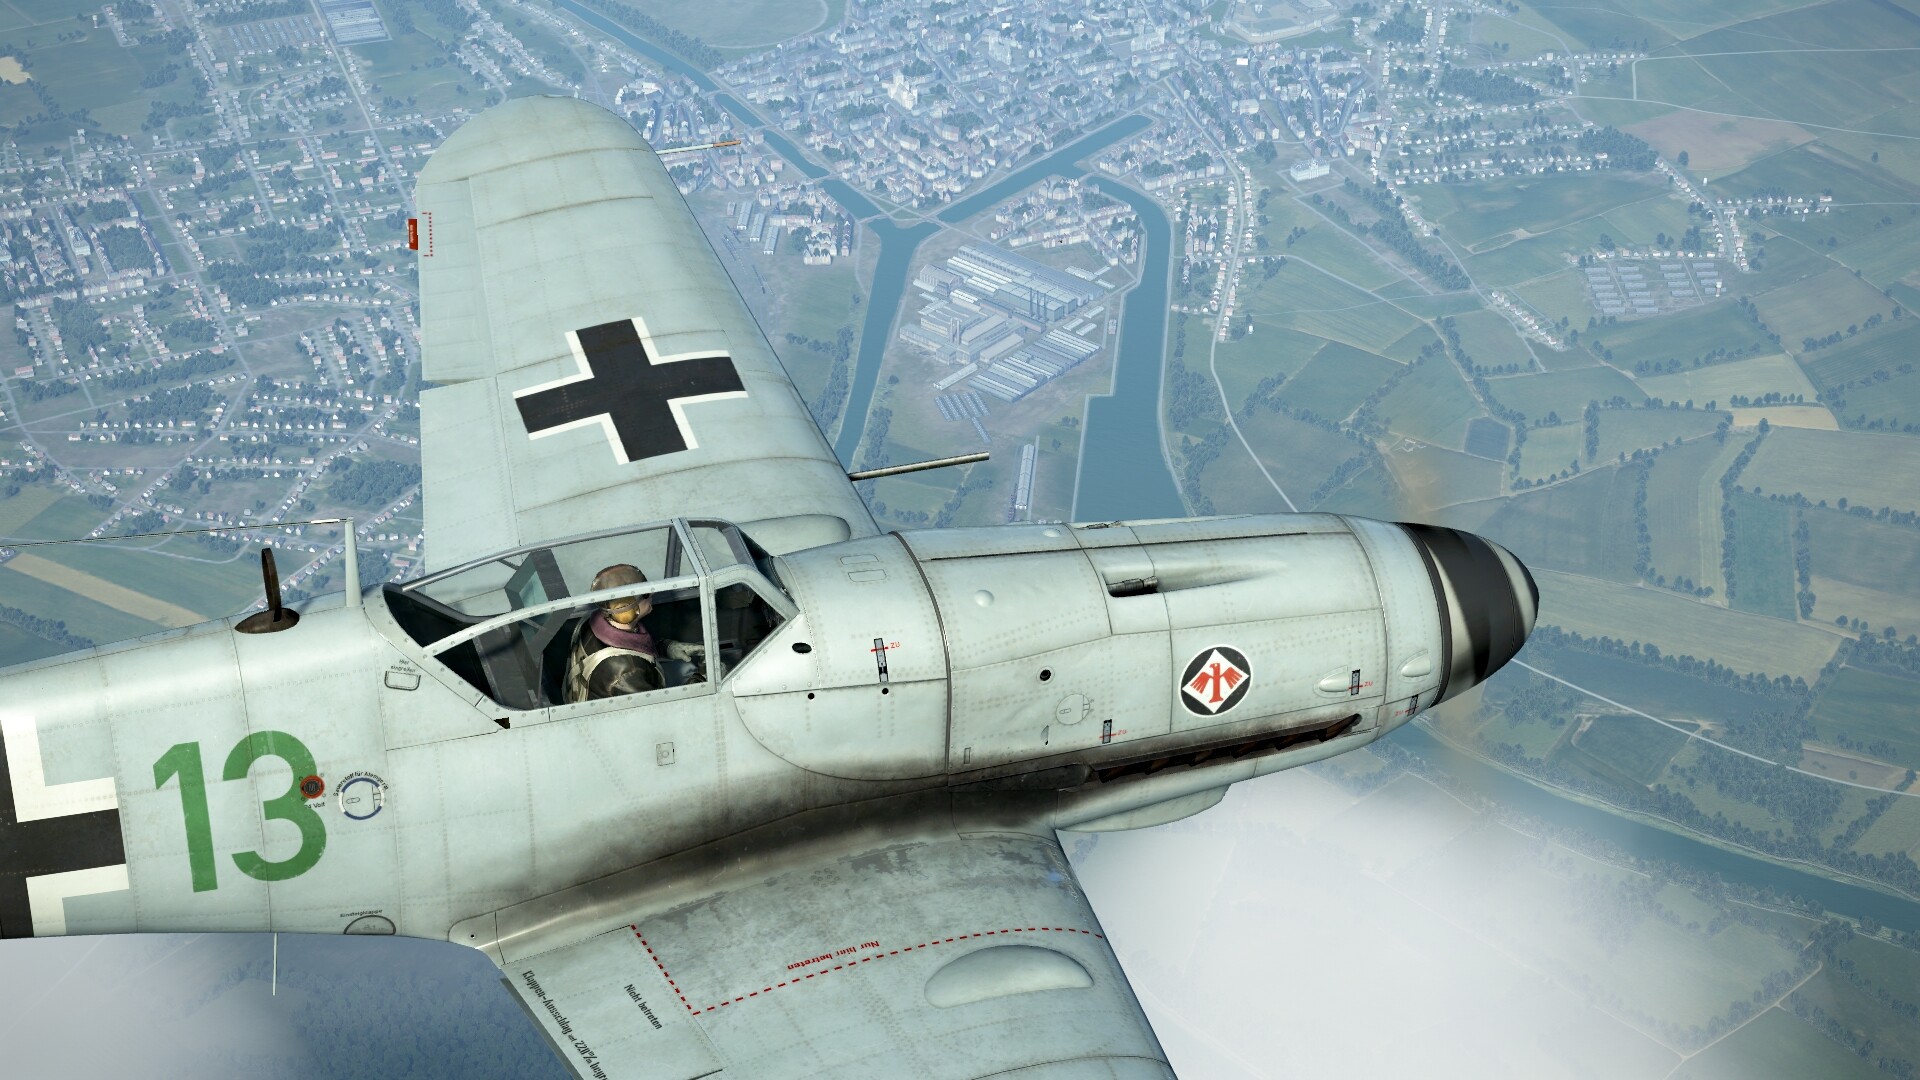 IL-2 Sturmovik: Bf 109 G-6AS Collector Plane DLC